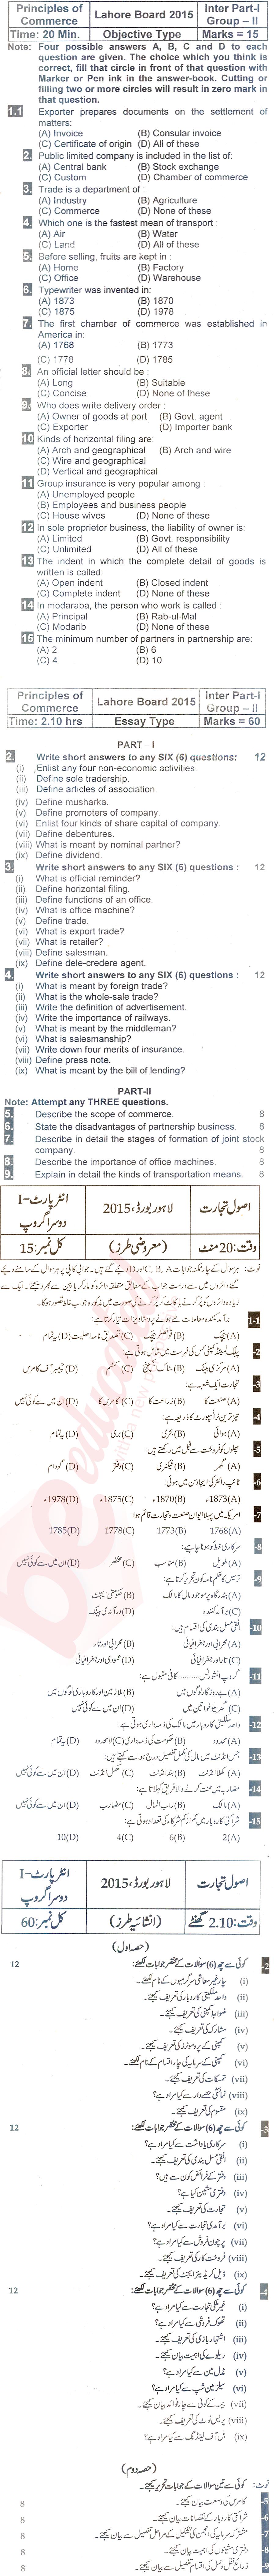 Principles of Commerce ICOM Part 1 Past Paper Group 2 BISE Lahore 2015